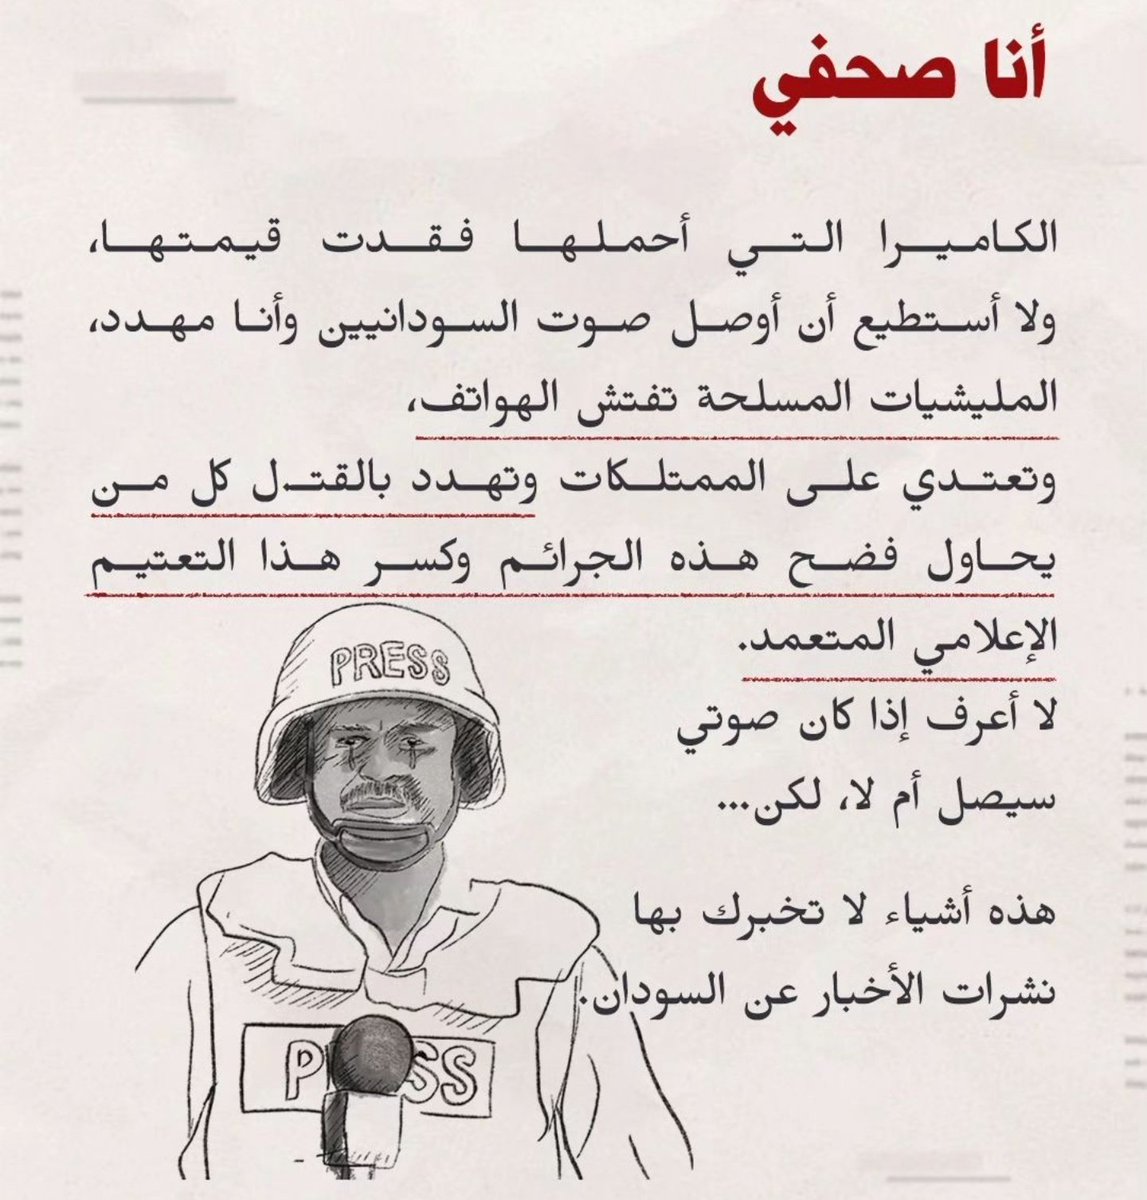 #SudanCrisis 
#help_Sudan 
#السودانيون_يستحقون_السلام